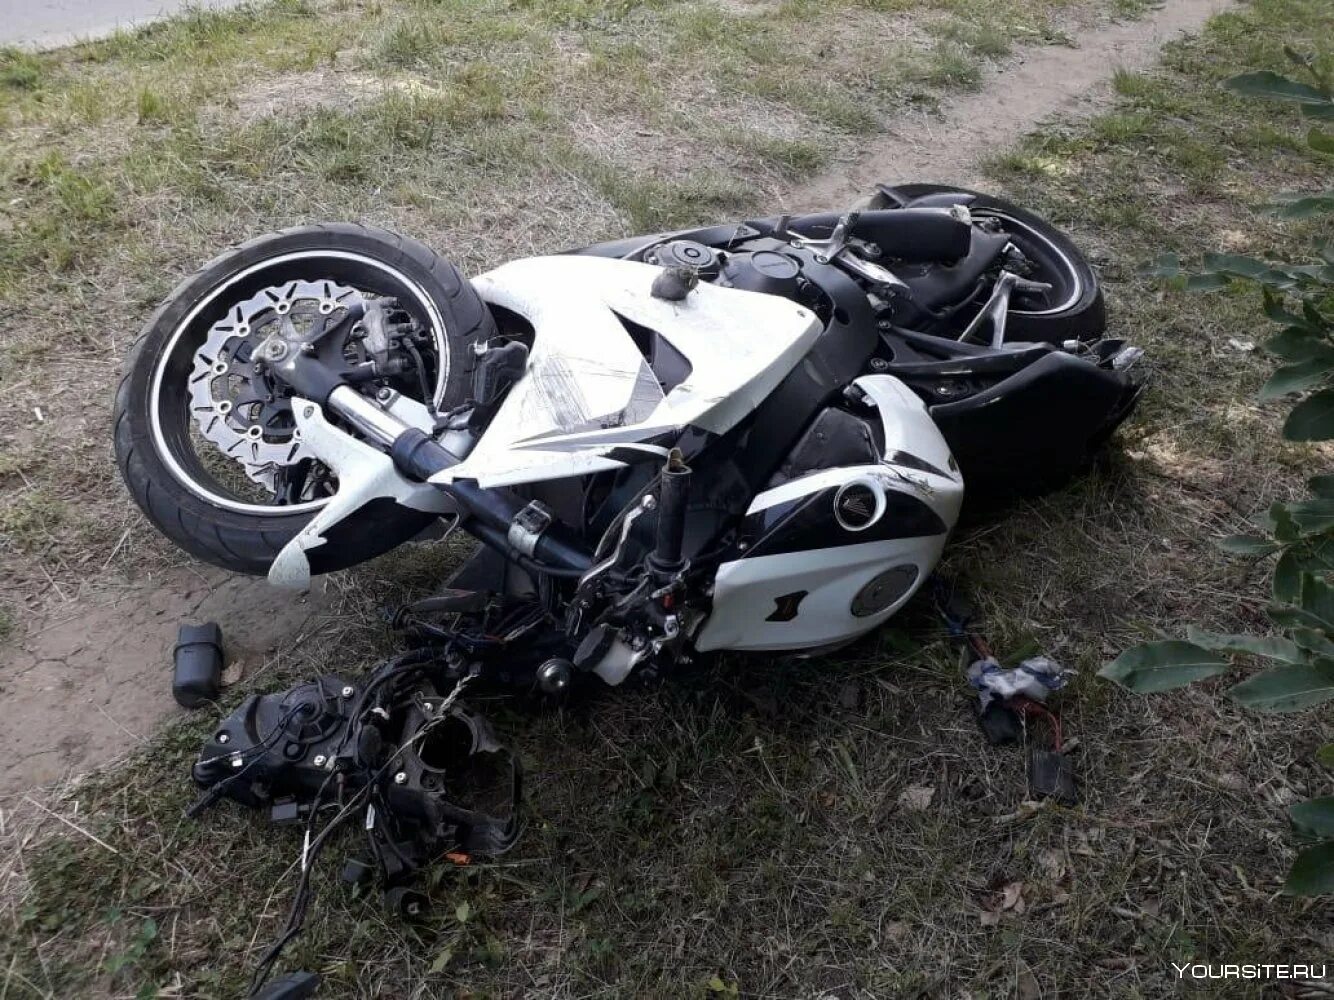 Разбитый мотоцикл Ямаха р1. Разбитый мотоцикл Кавасаки. Разбил мотоцикл